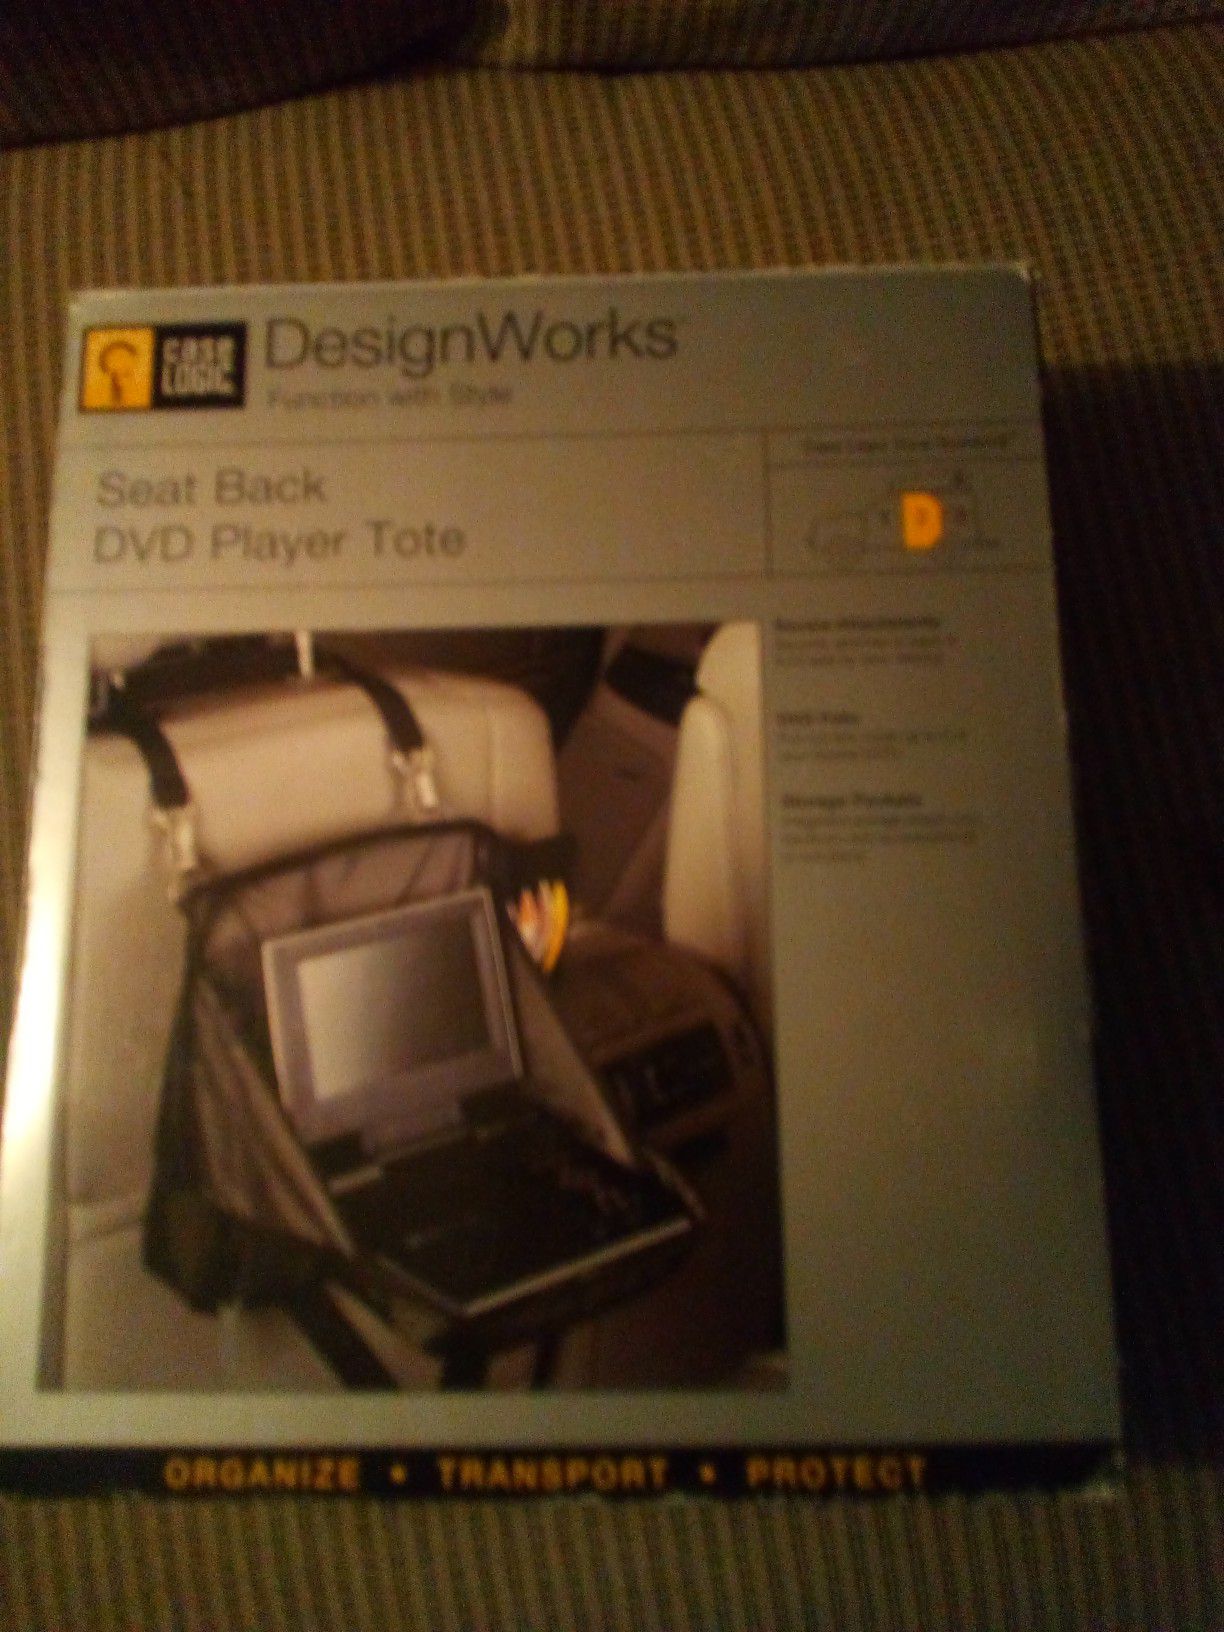 Designworks seat-back DVD player tote